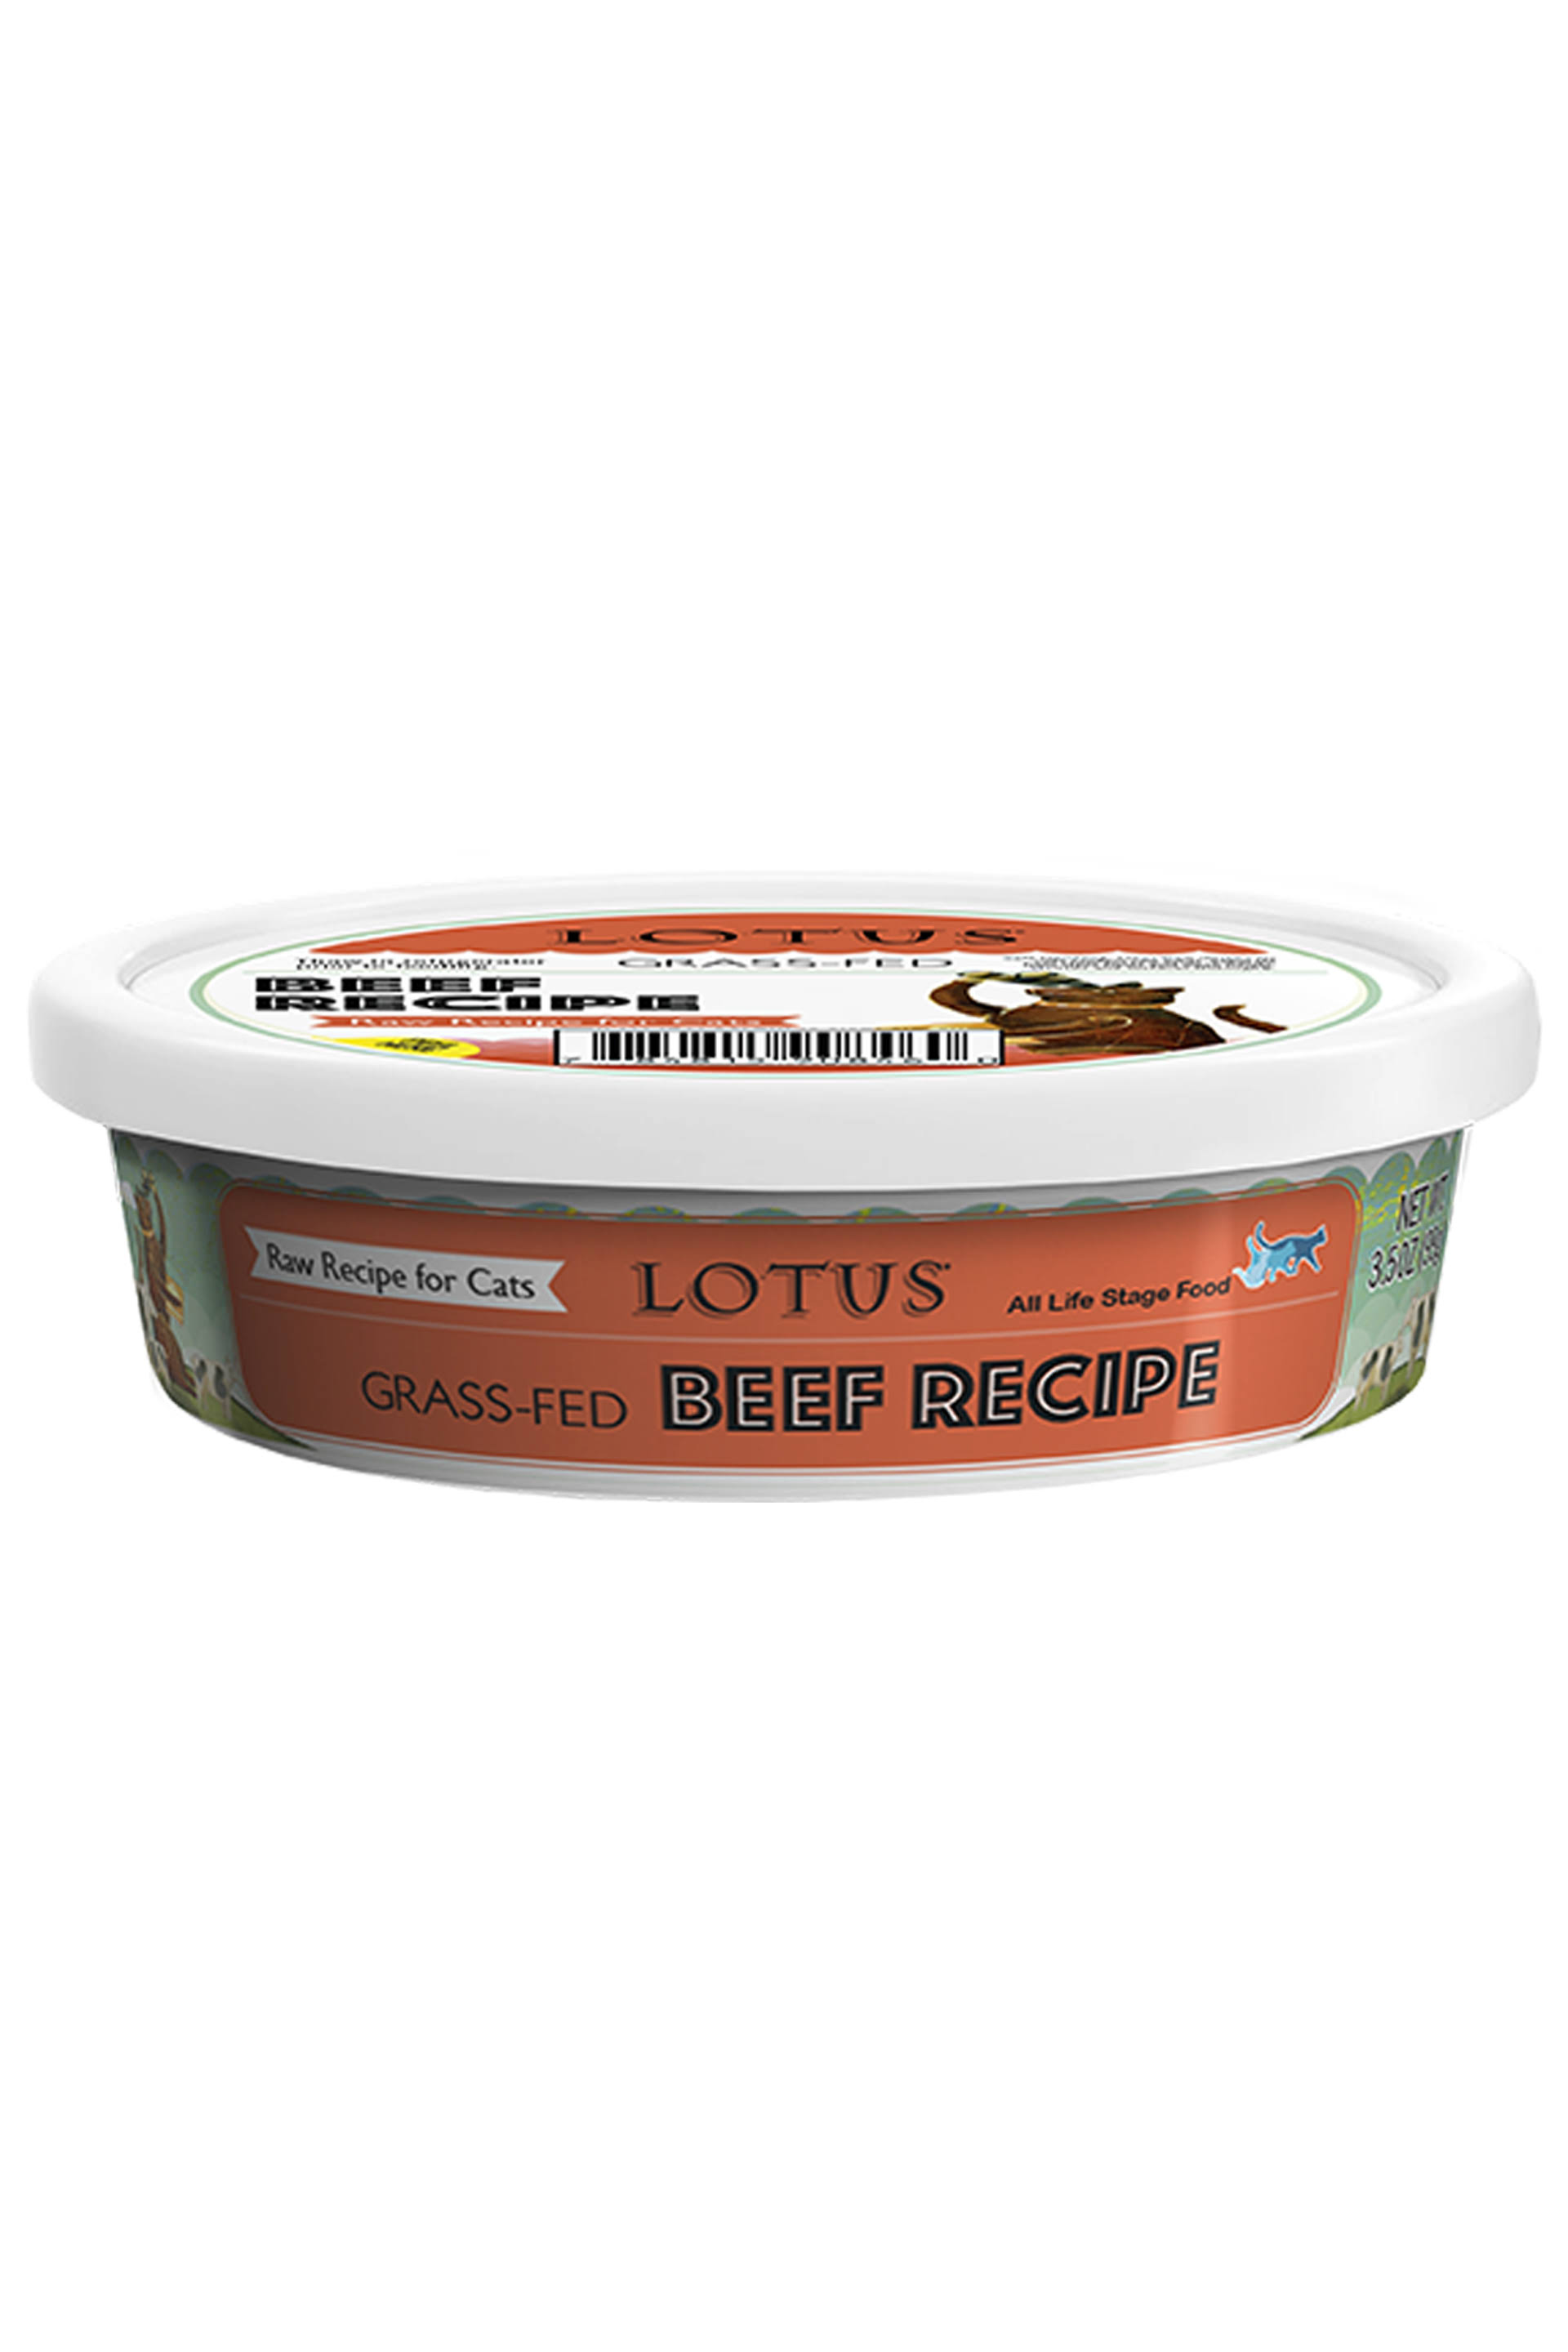 Lotus Grass-Fed Beef Raw Frozen Cat Food, 3.5-oz